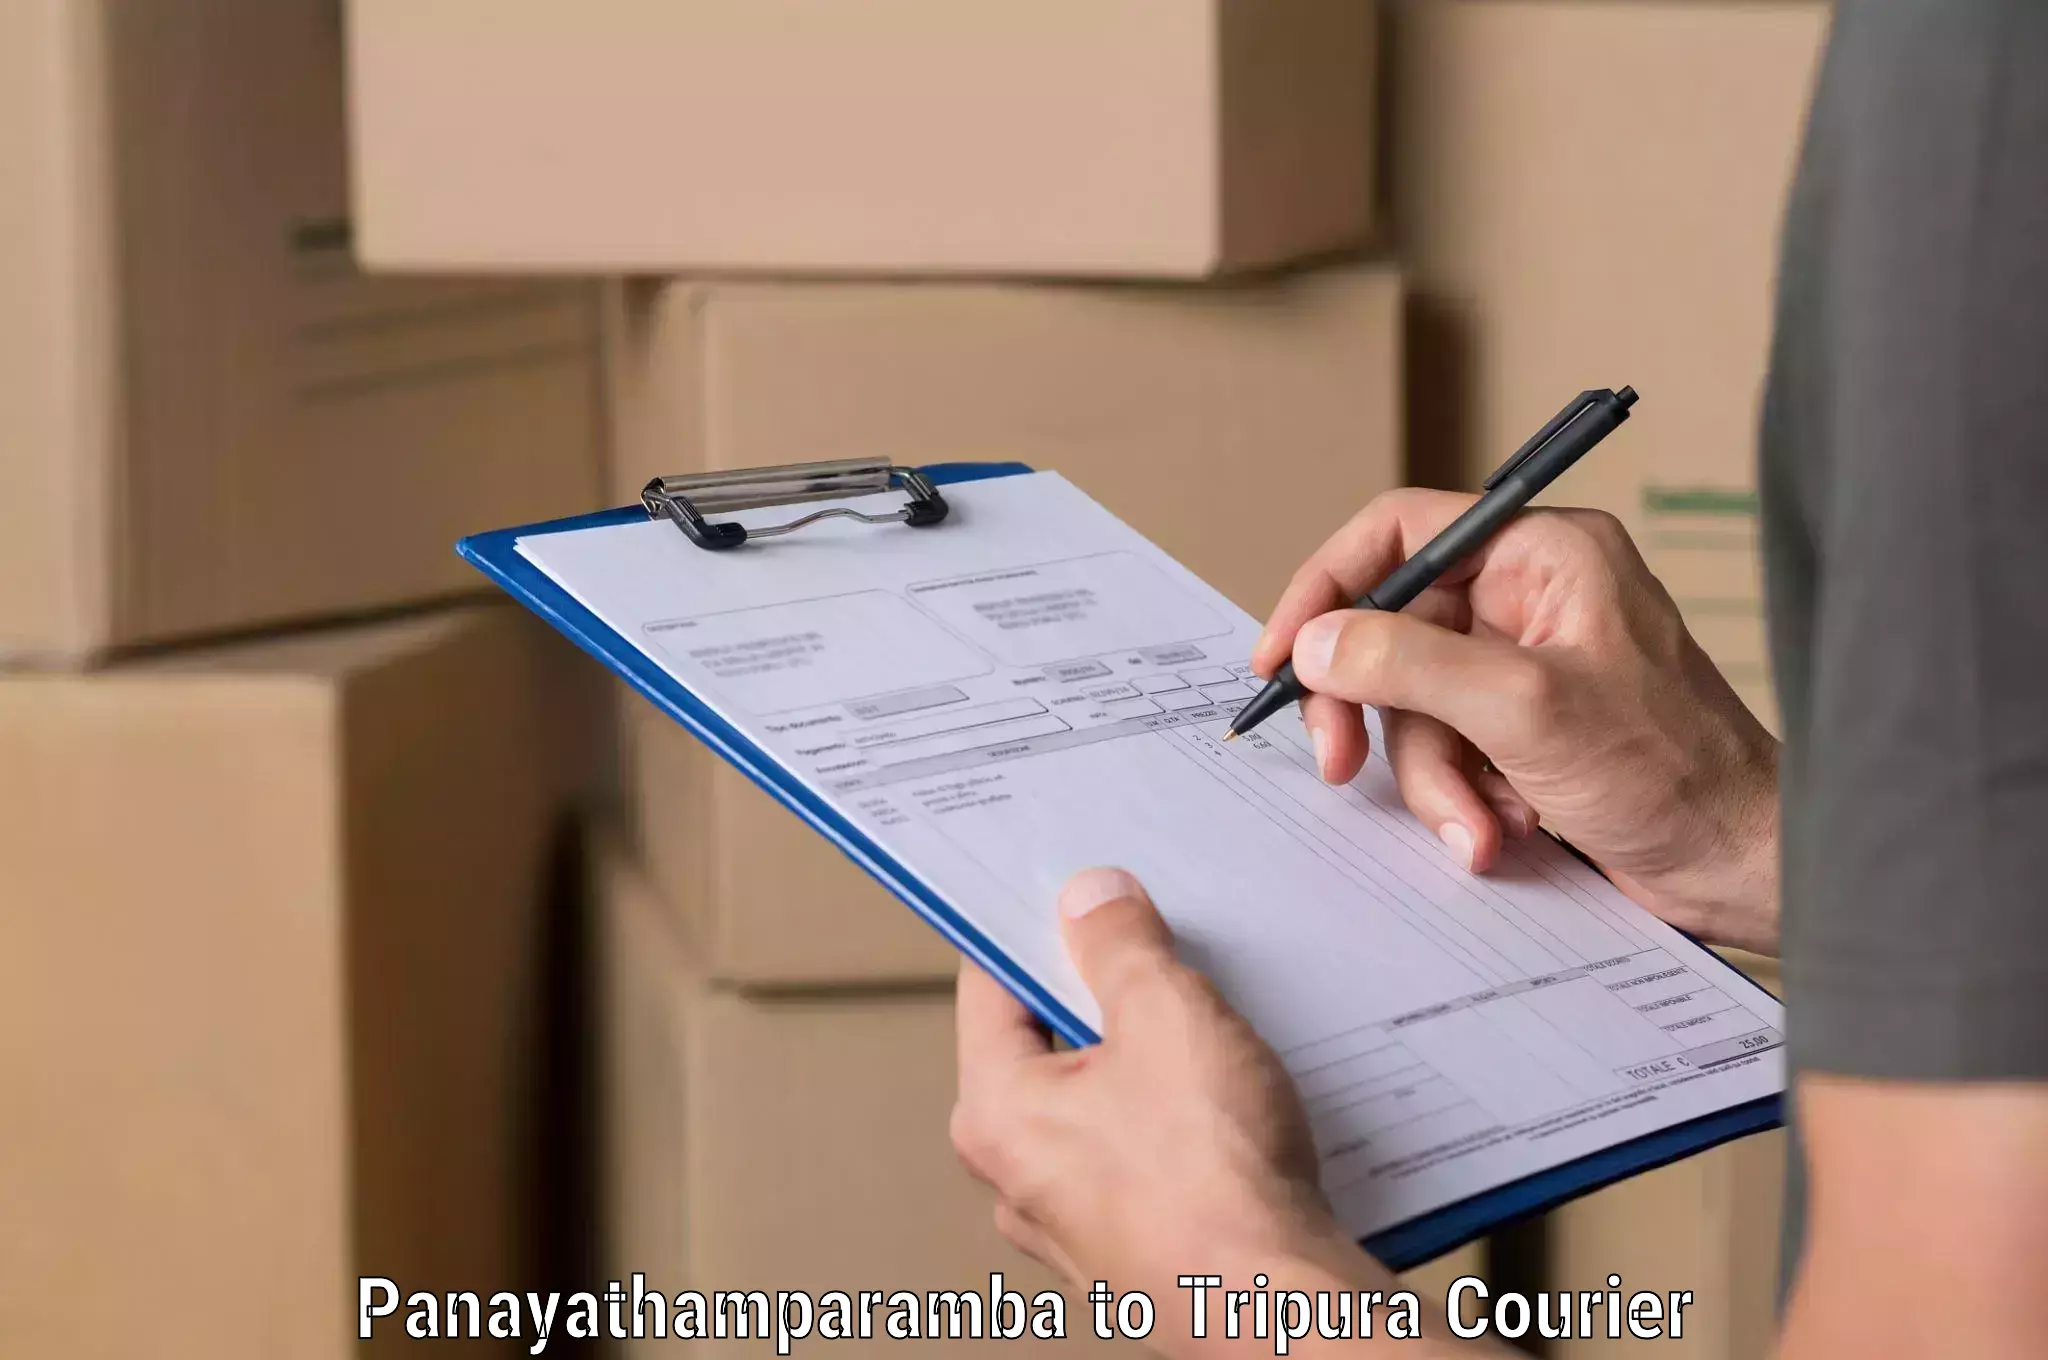 State-of-the-art courier technology Panayathamparamba to Amarpur